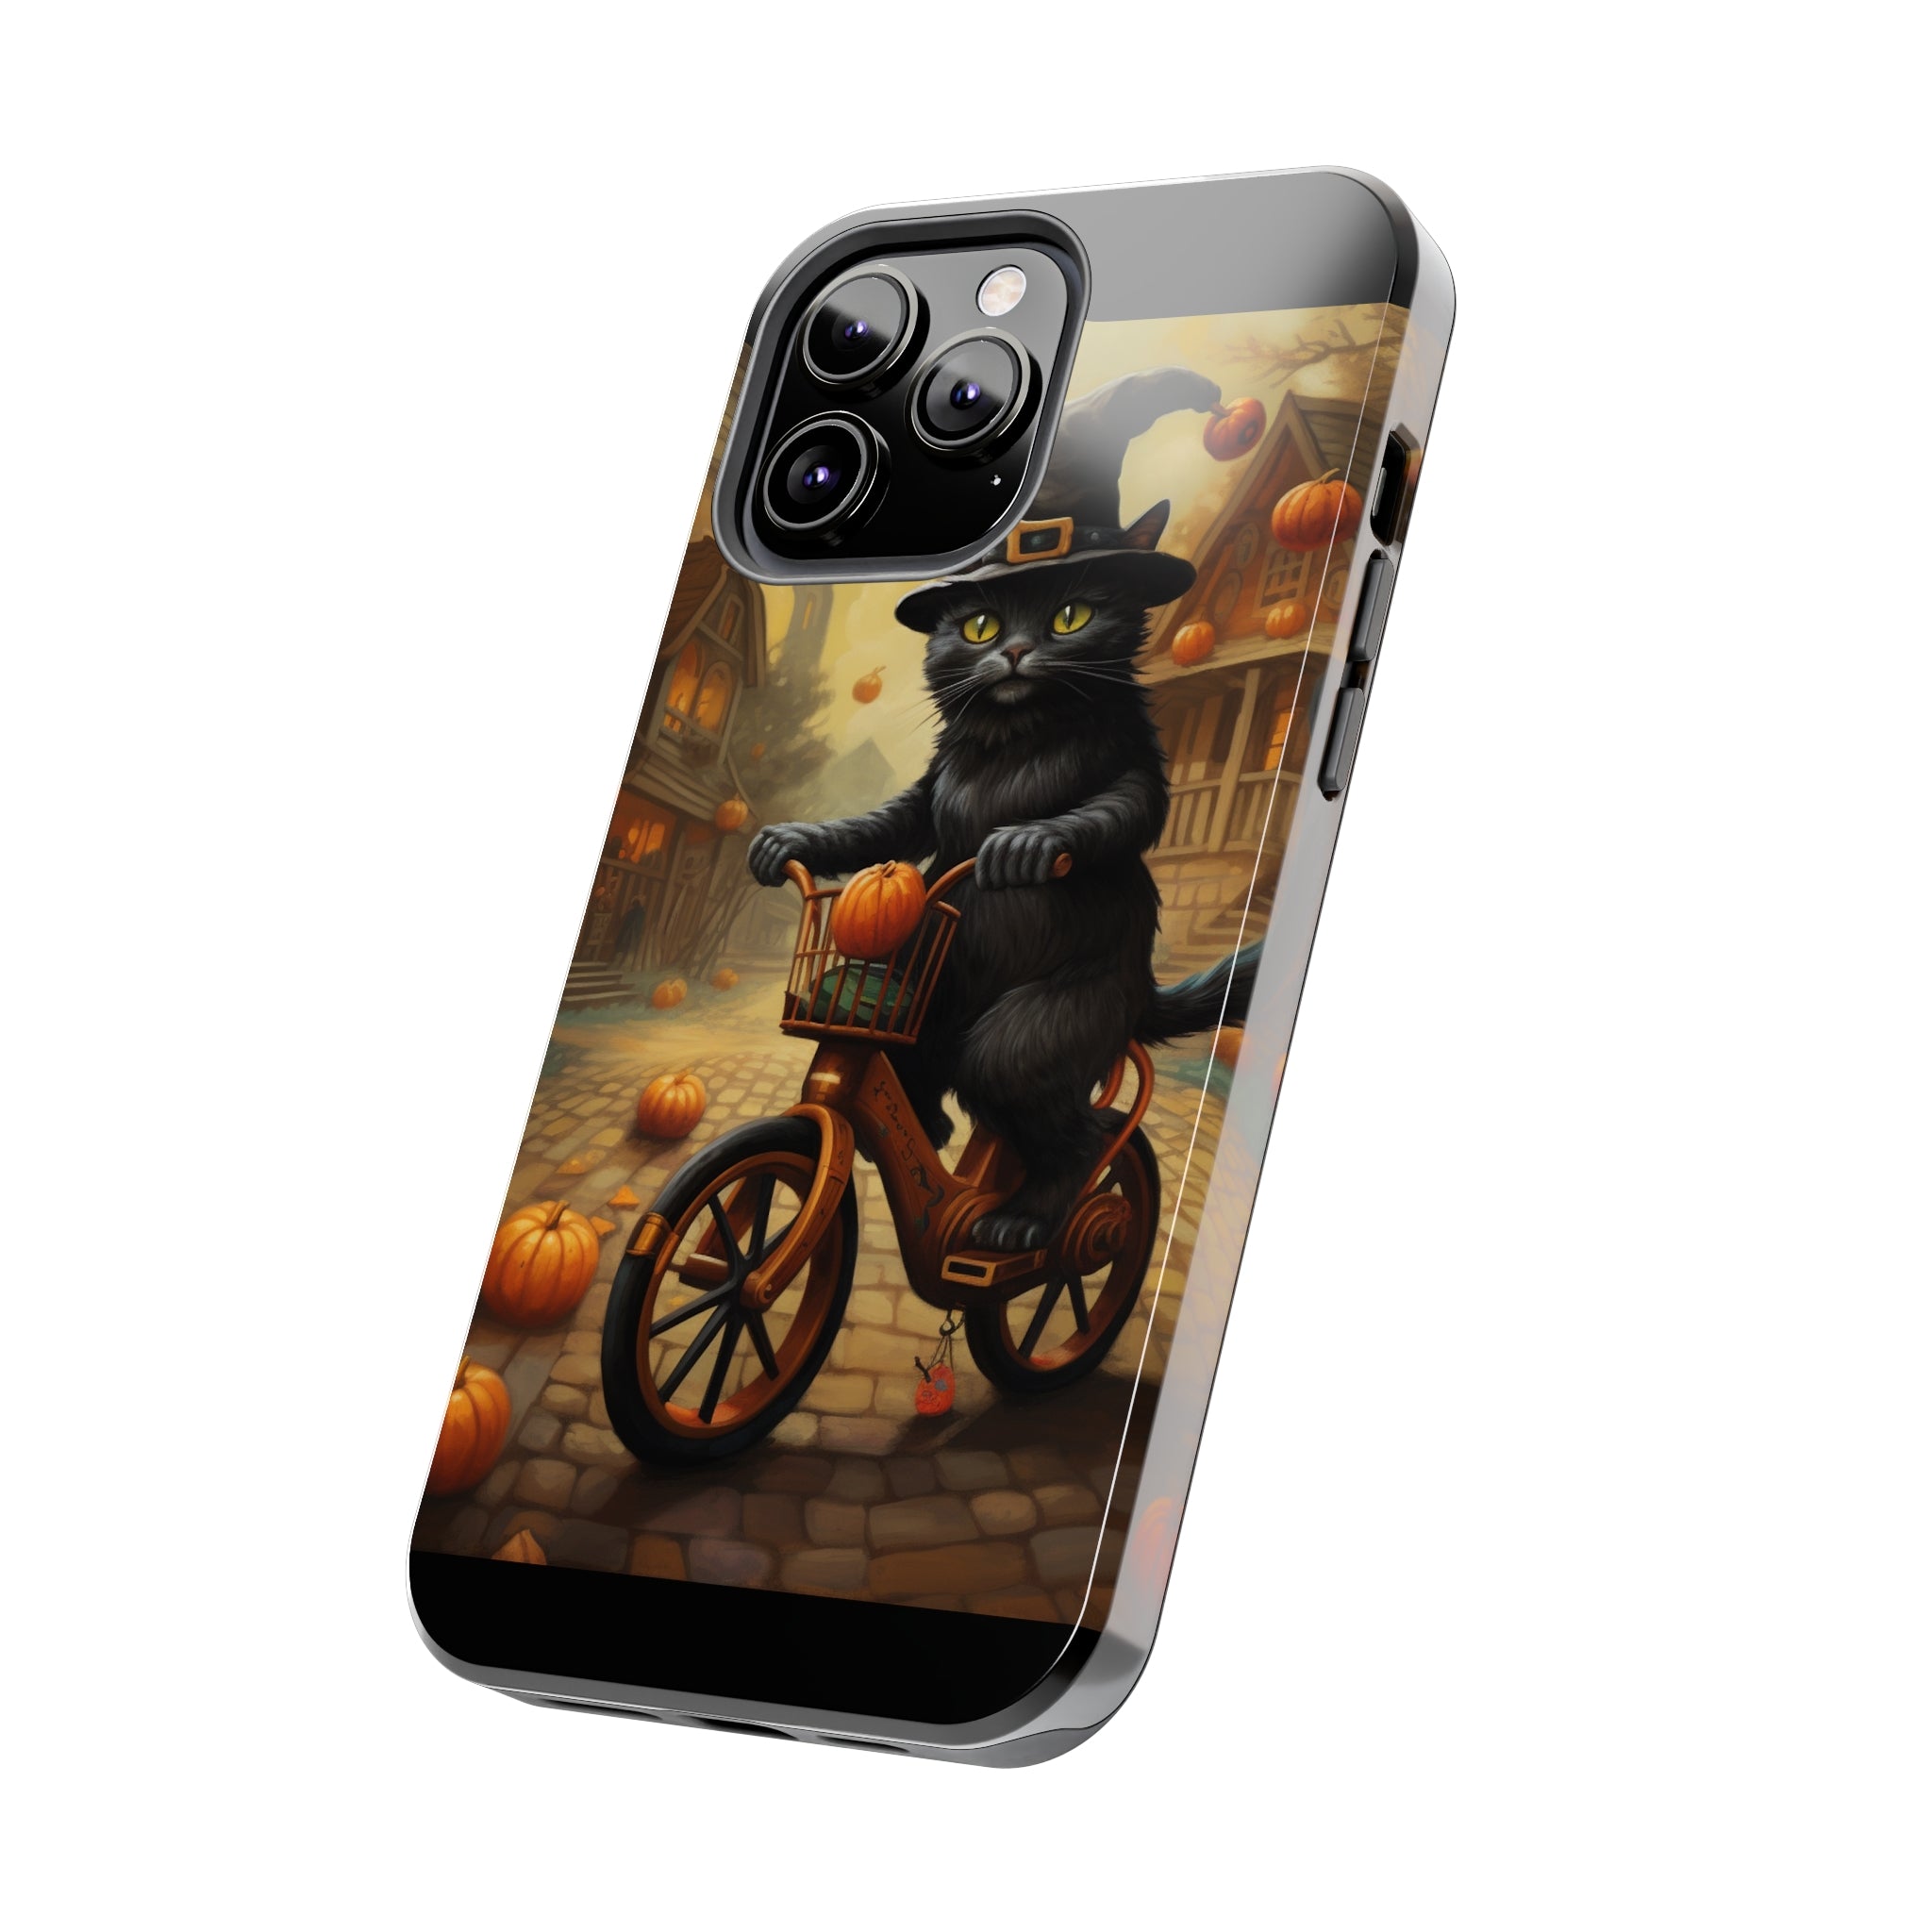 Black Kitty - Tough iPhone Cases - 21 Sizes